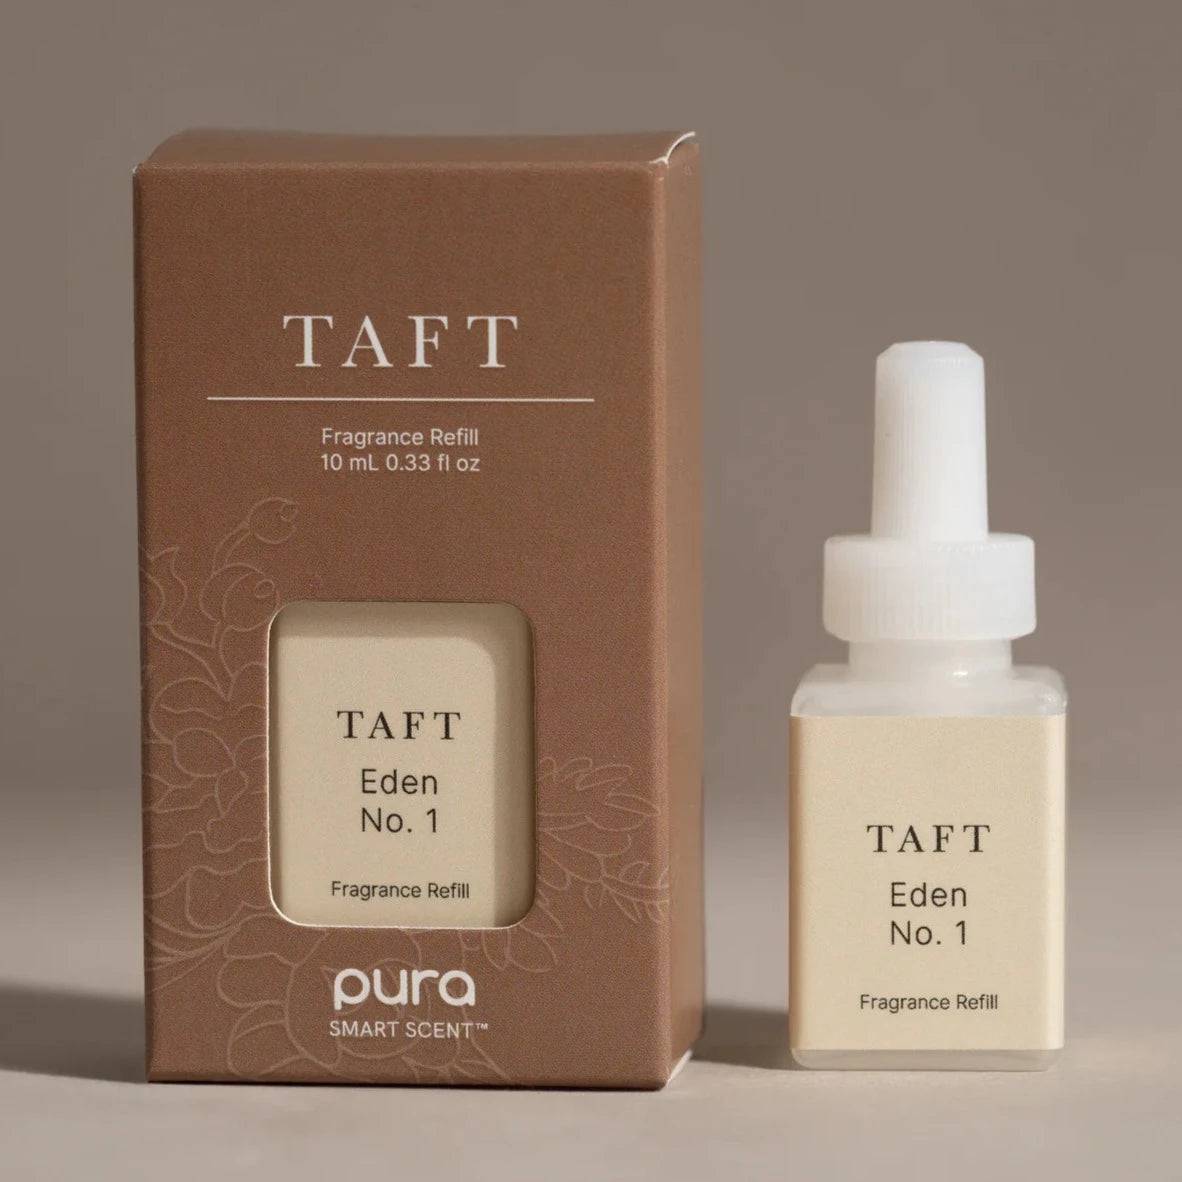 Eden No. 1 Pura Fragrance Refill by Taft - The Preppy Bunny